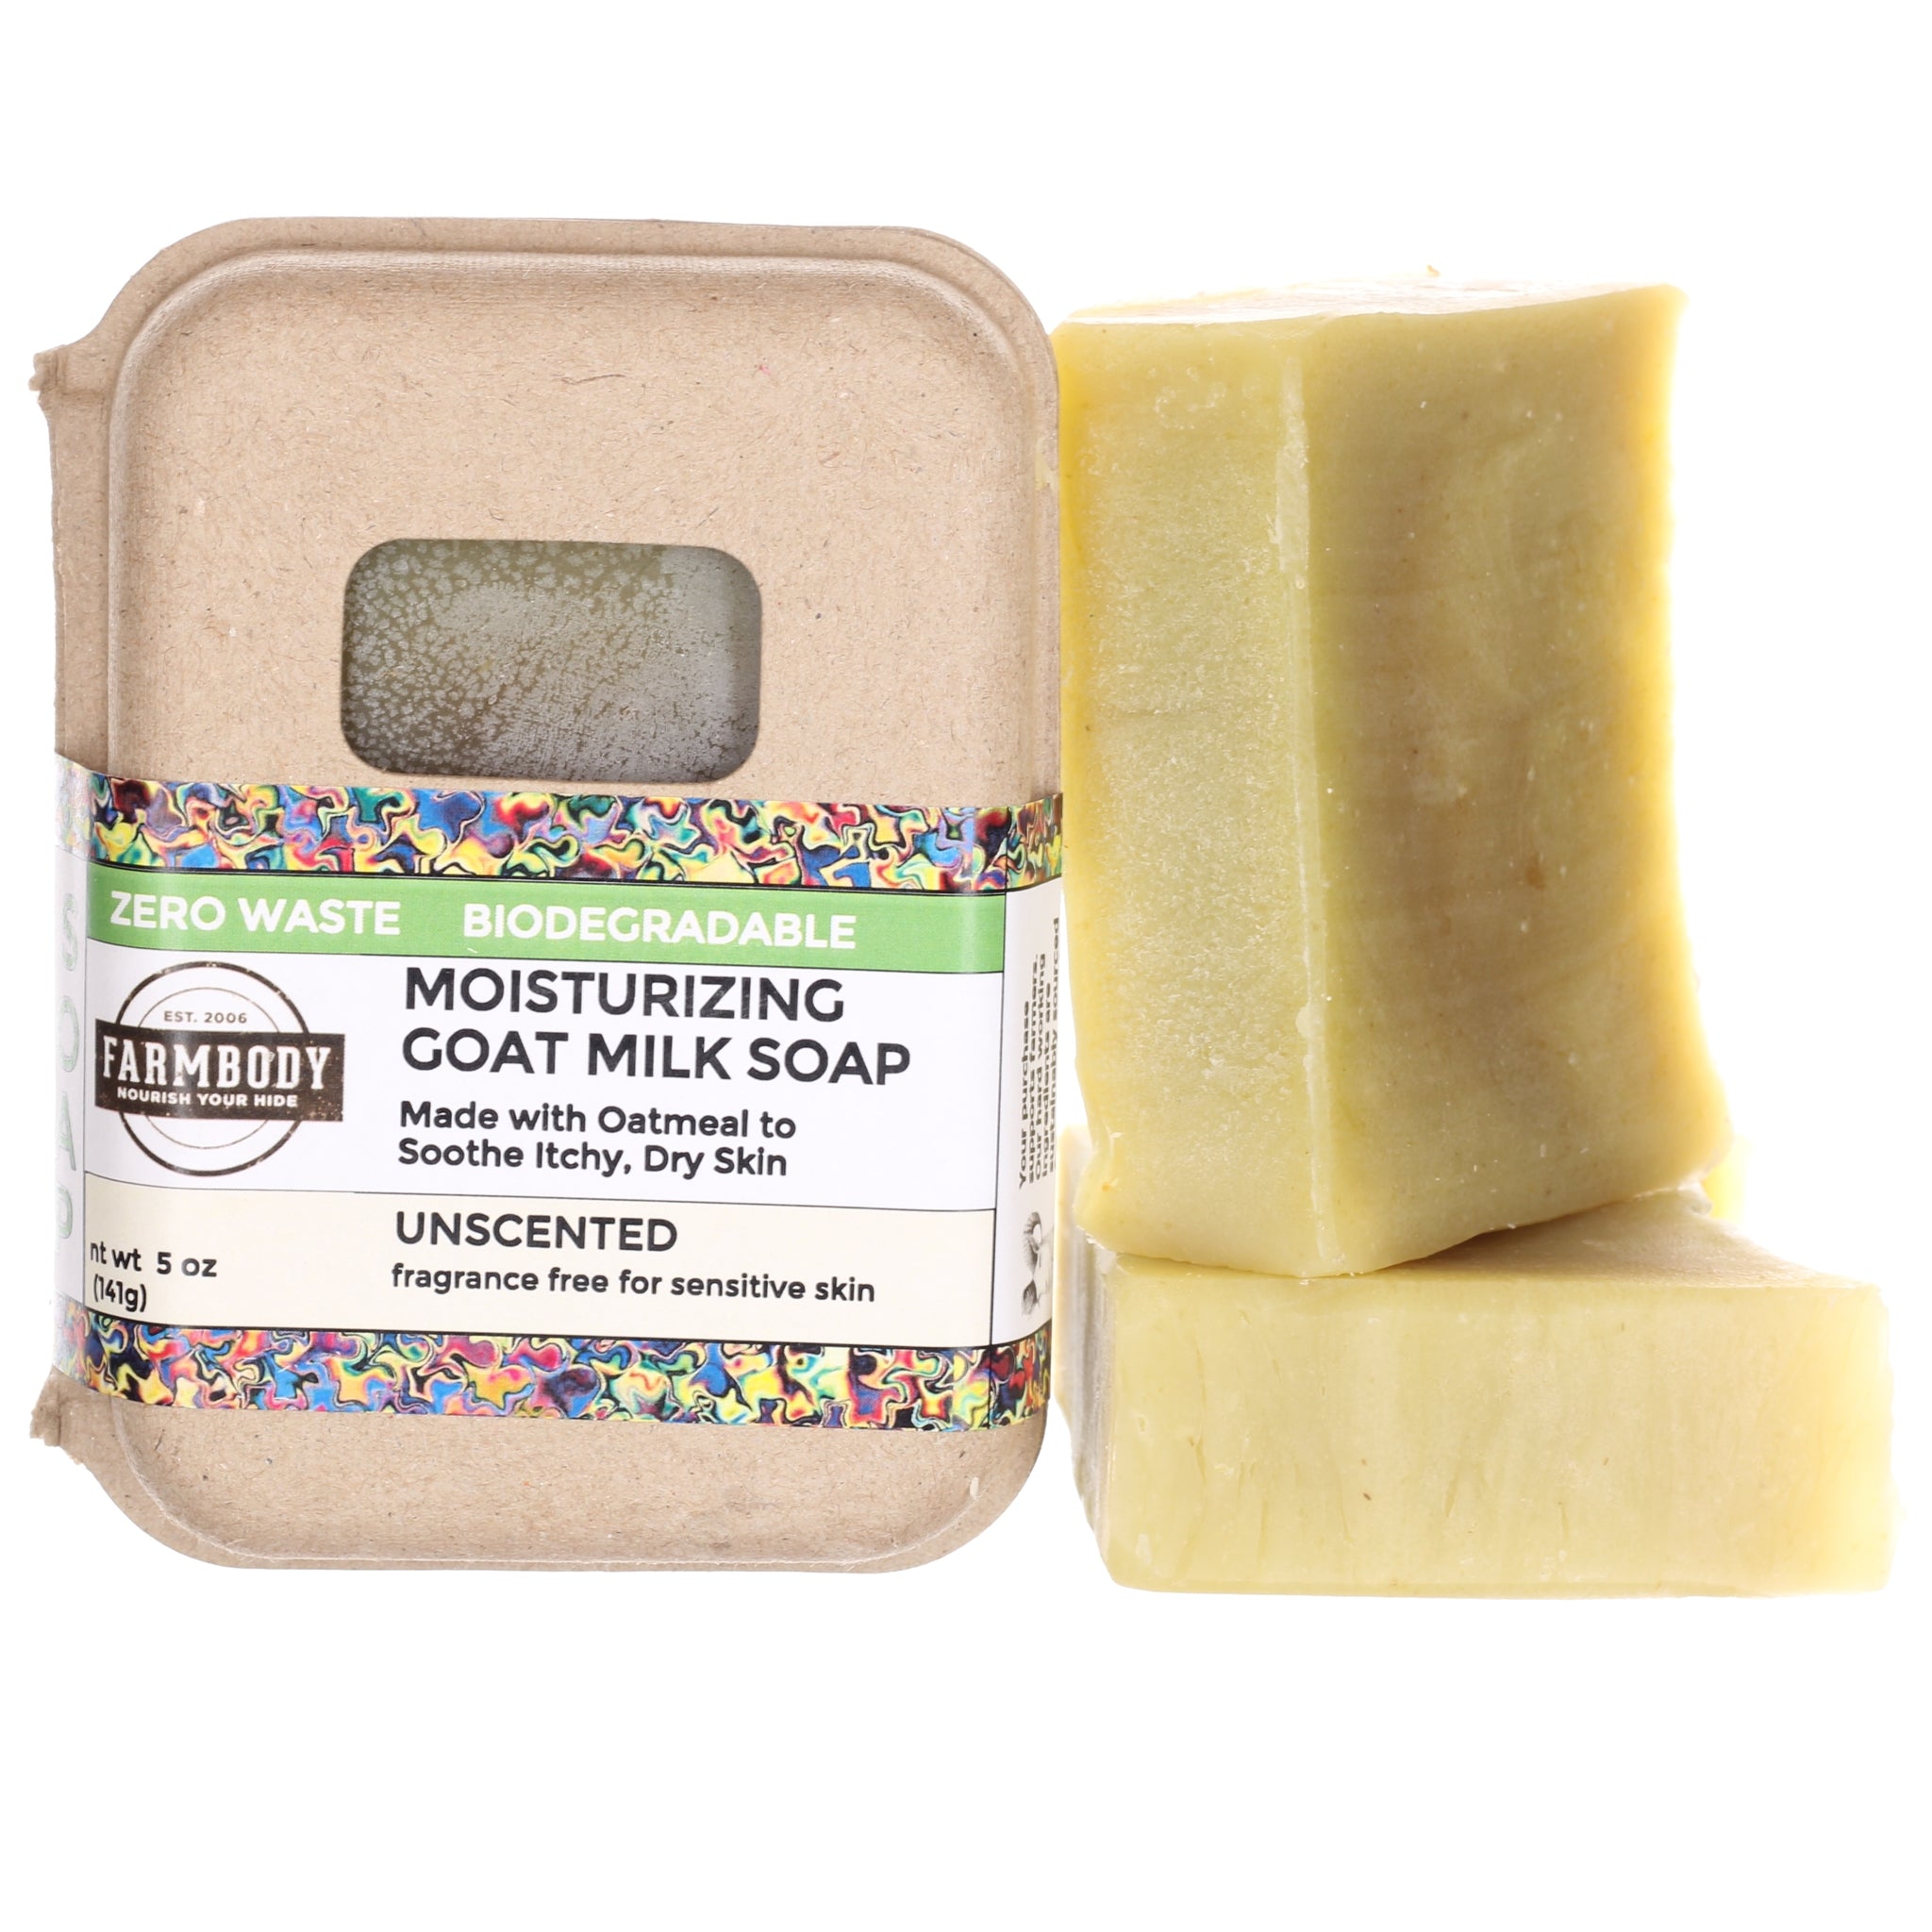 Farmbody Fragrance Free Moisturizing Goat Milk Soap for Eczema and Sensitive Skin